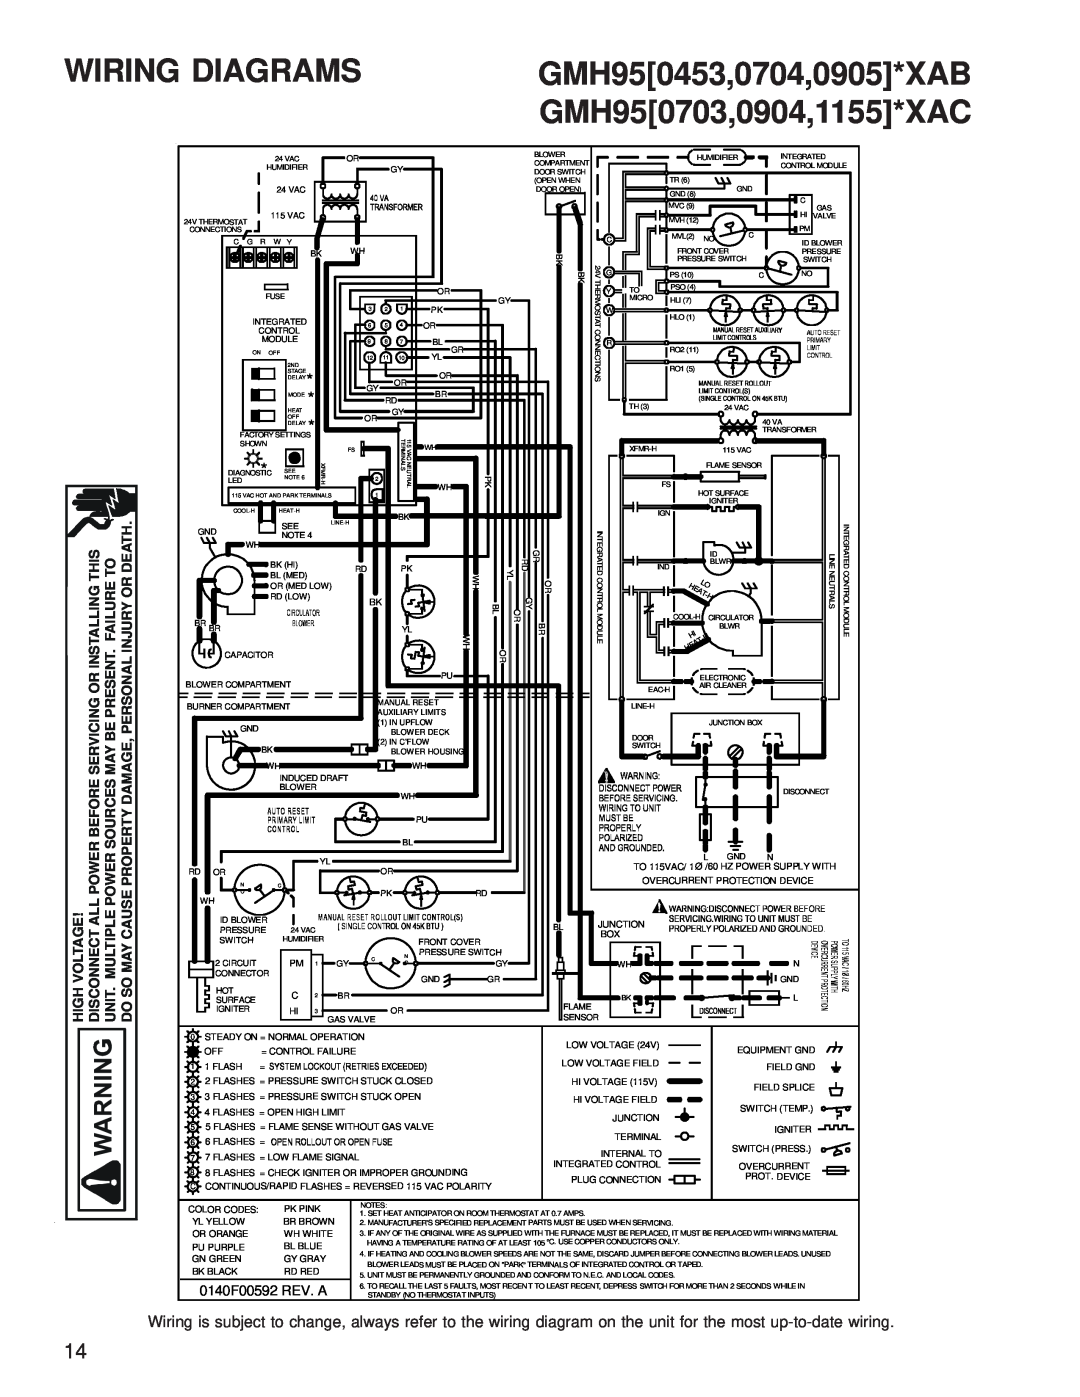 Goodman Mfg service manual Wiring Diagrams, GMH950453,0704,0905*XAB, GMH950703,0904,1155*XAC, 0140F00592 REV. A 